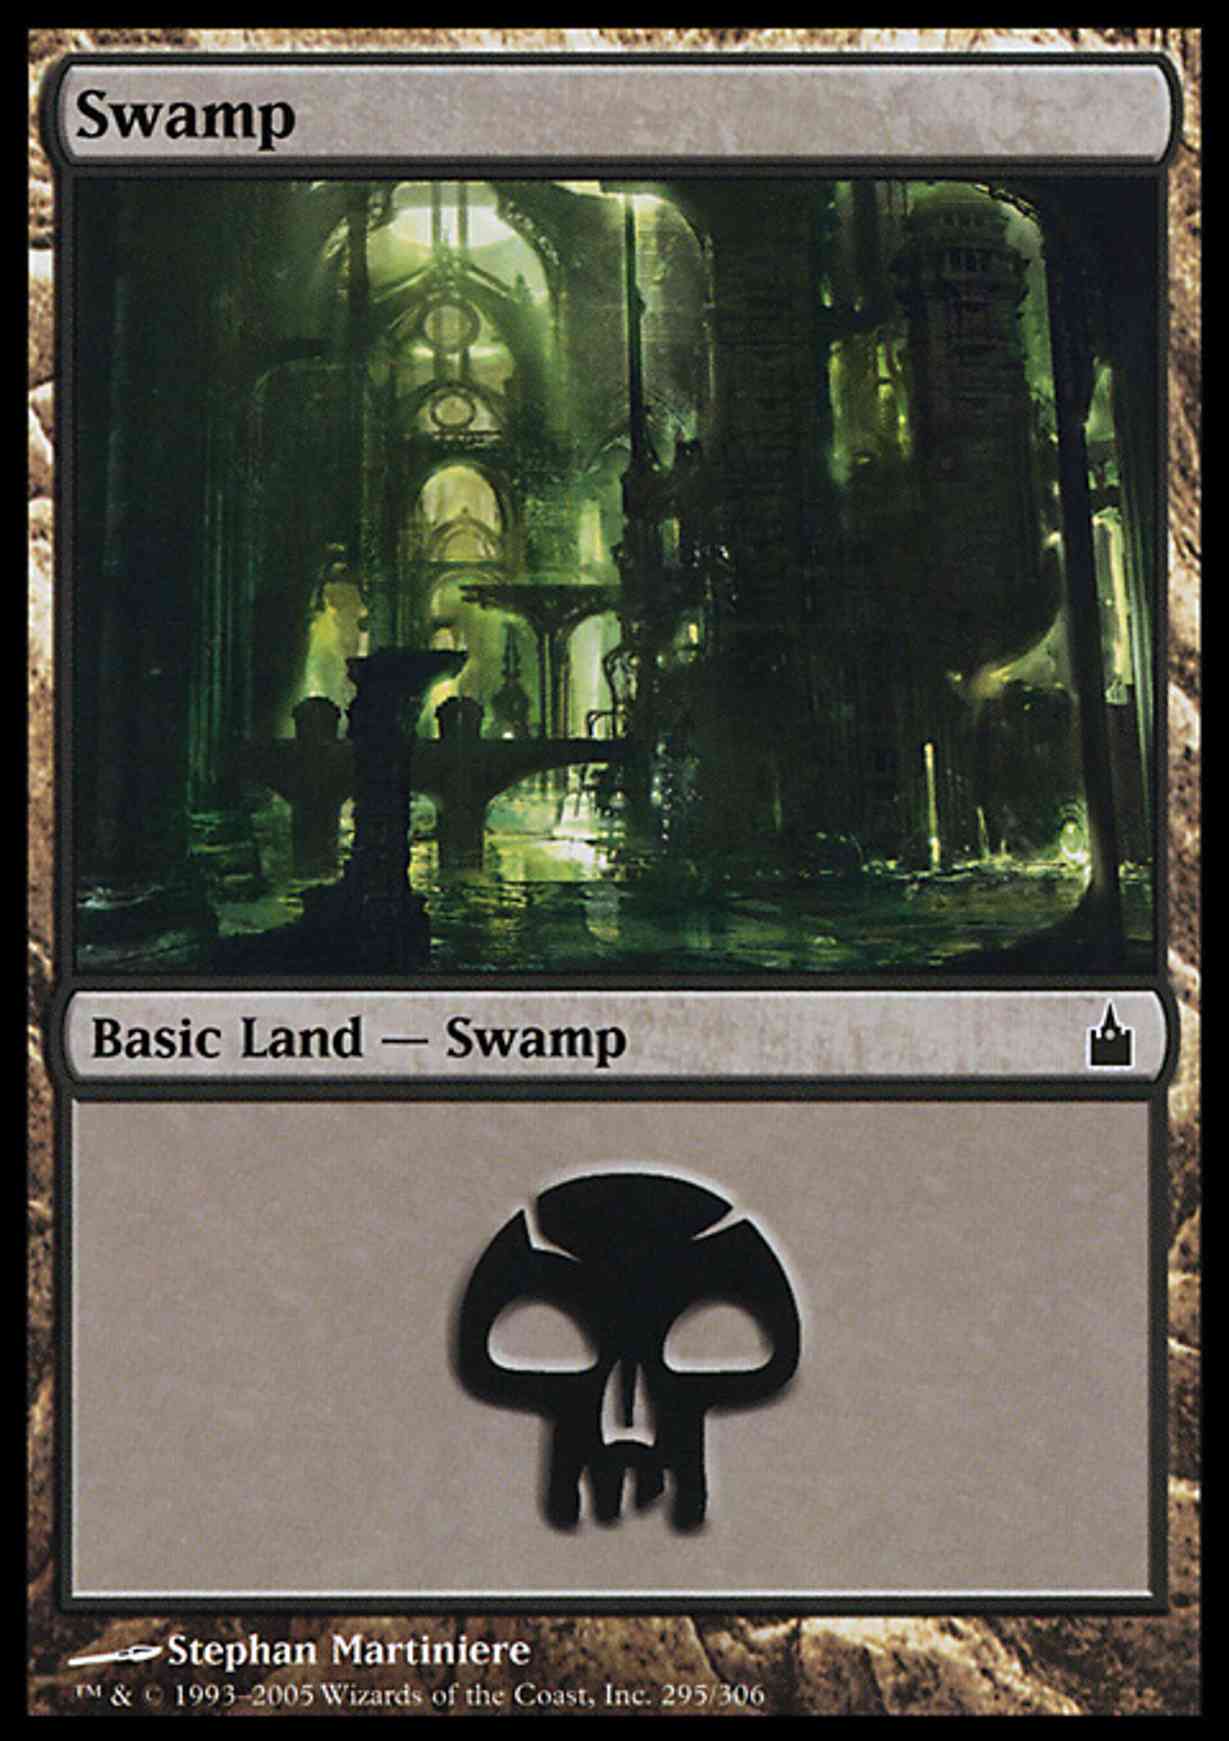 Swamp (295) magic card front